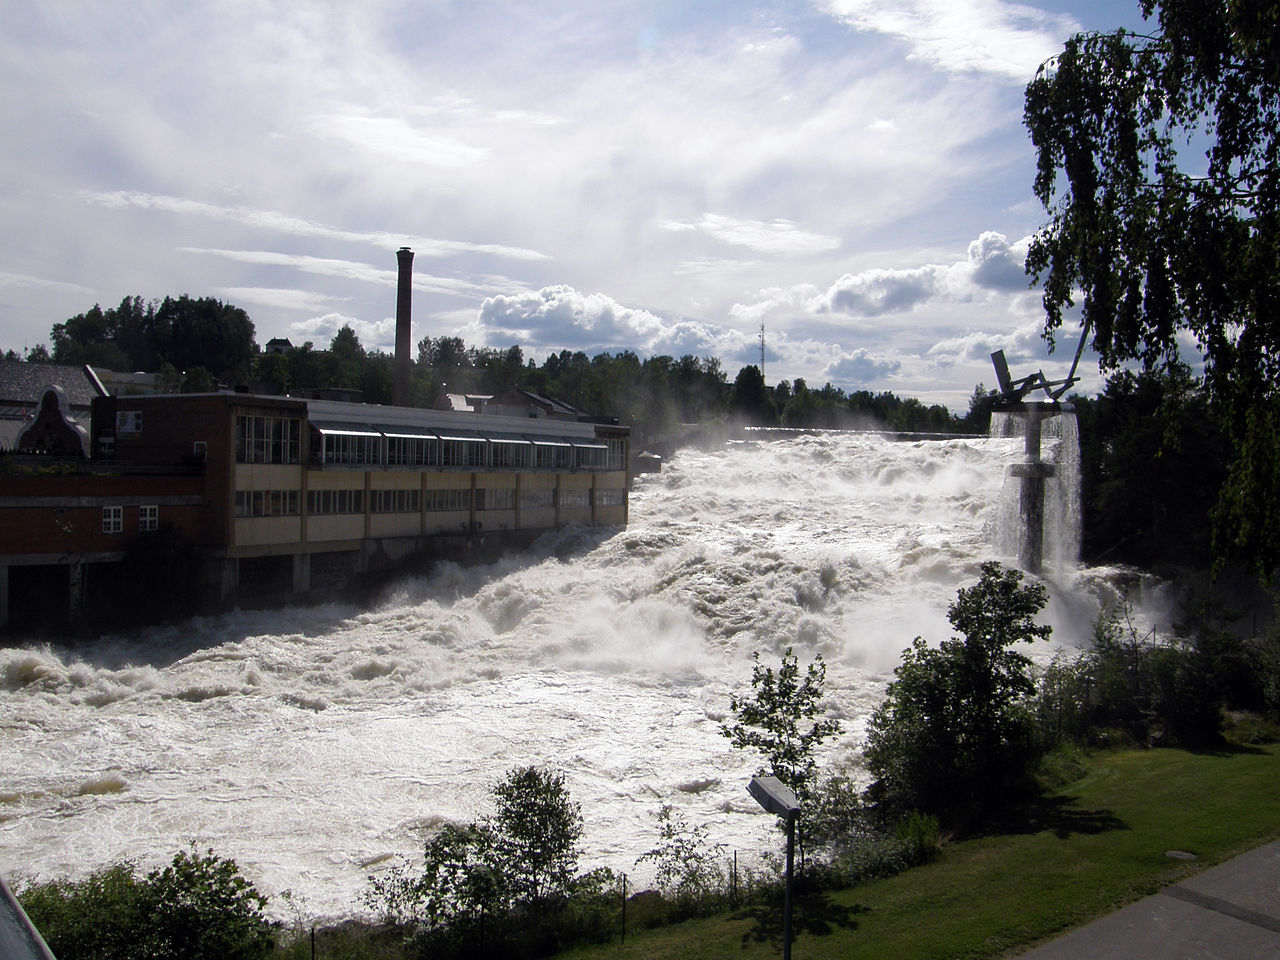 Hønefossen under the 20-year flood in July 2007. Photo: T. Bjørnstad/Wikimedia Commons